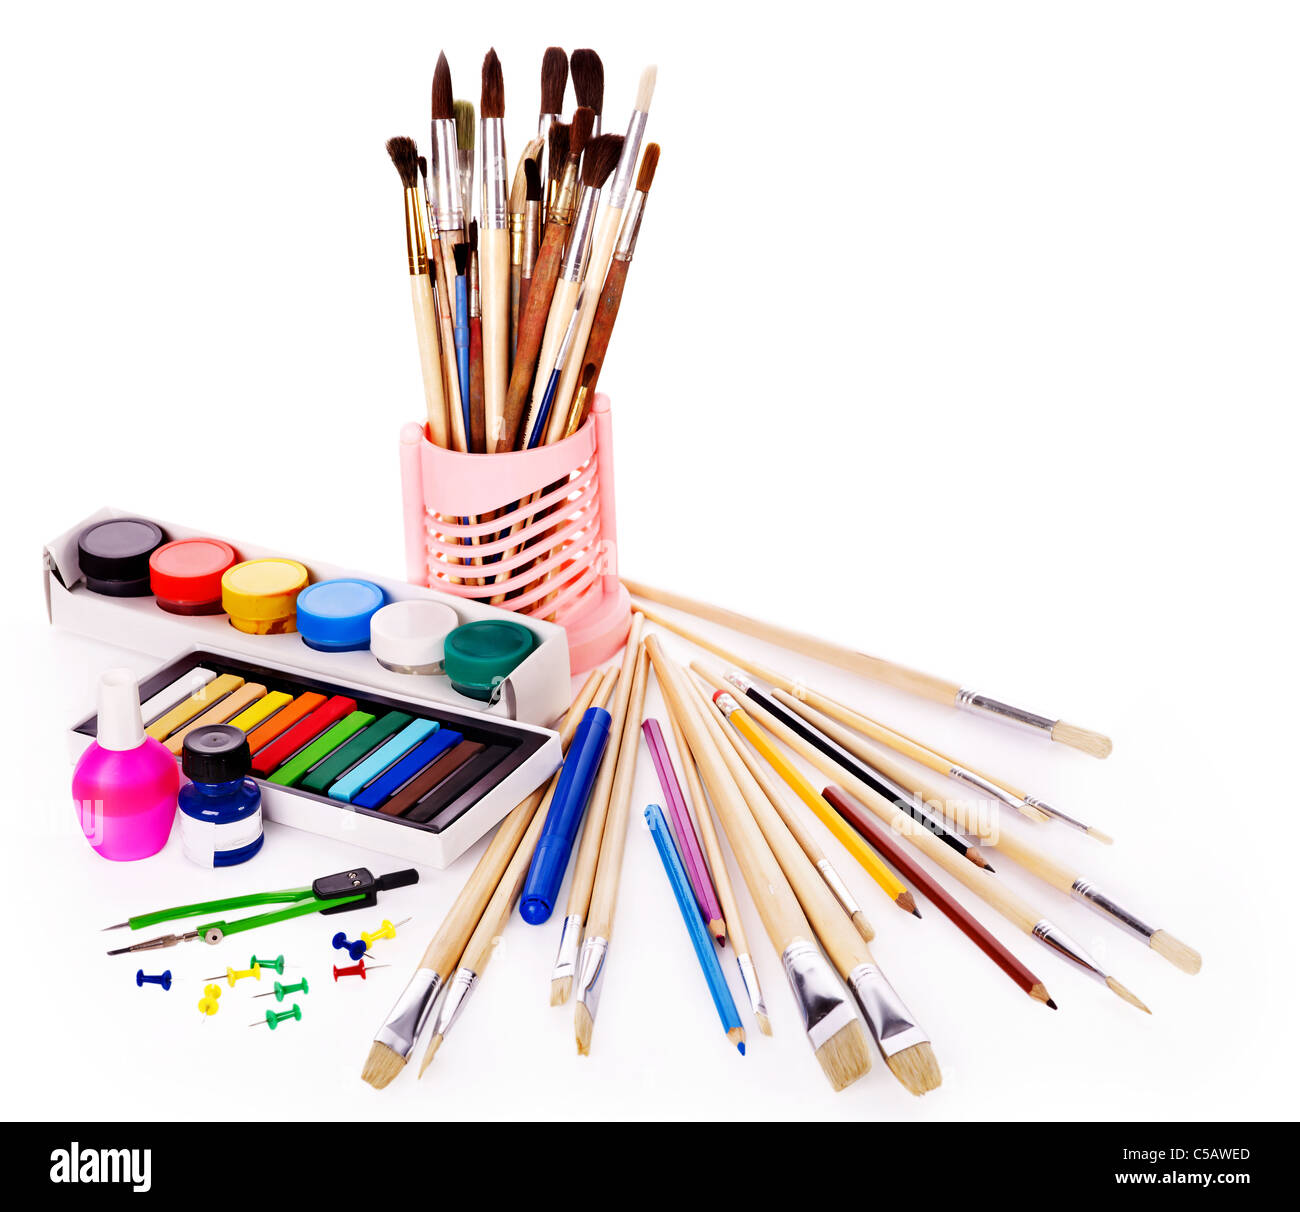 School office supplies. Writing utensils Stock Photo - Alamy